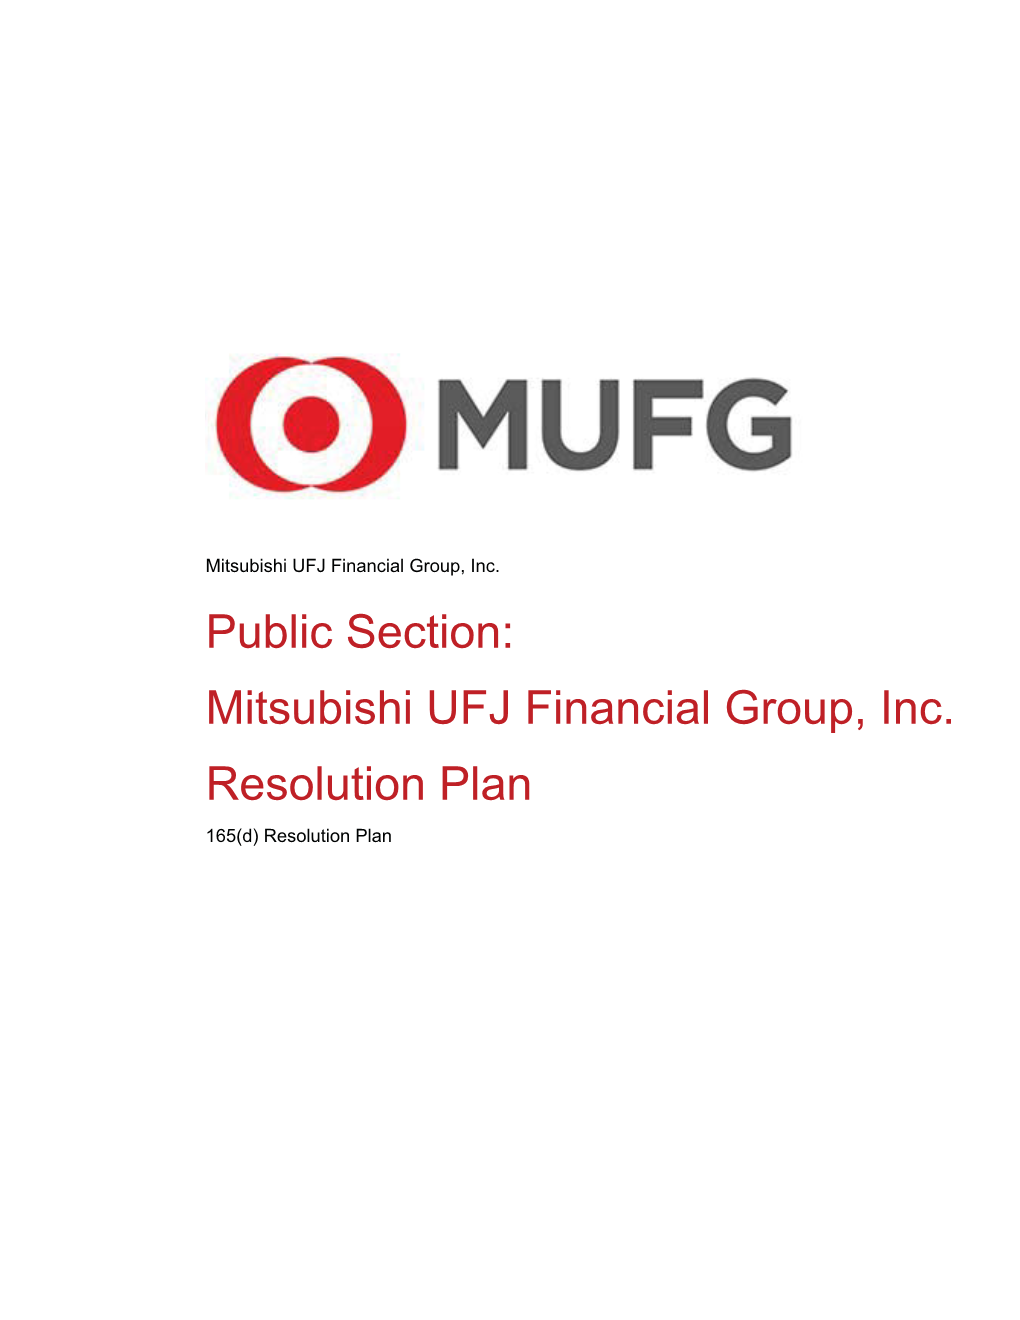 Public Section: Mitsubishi UFJ Financial Group, Inc. Resolution Plan